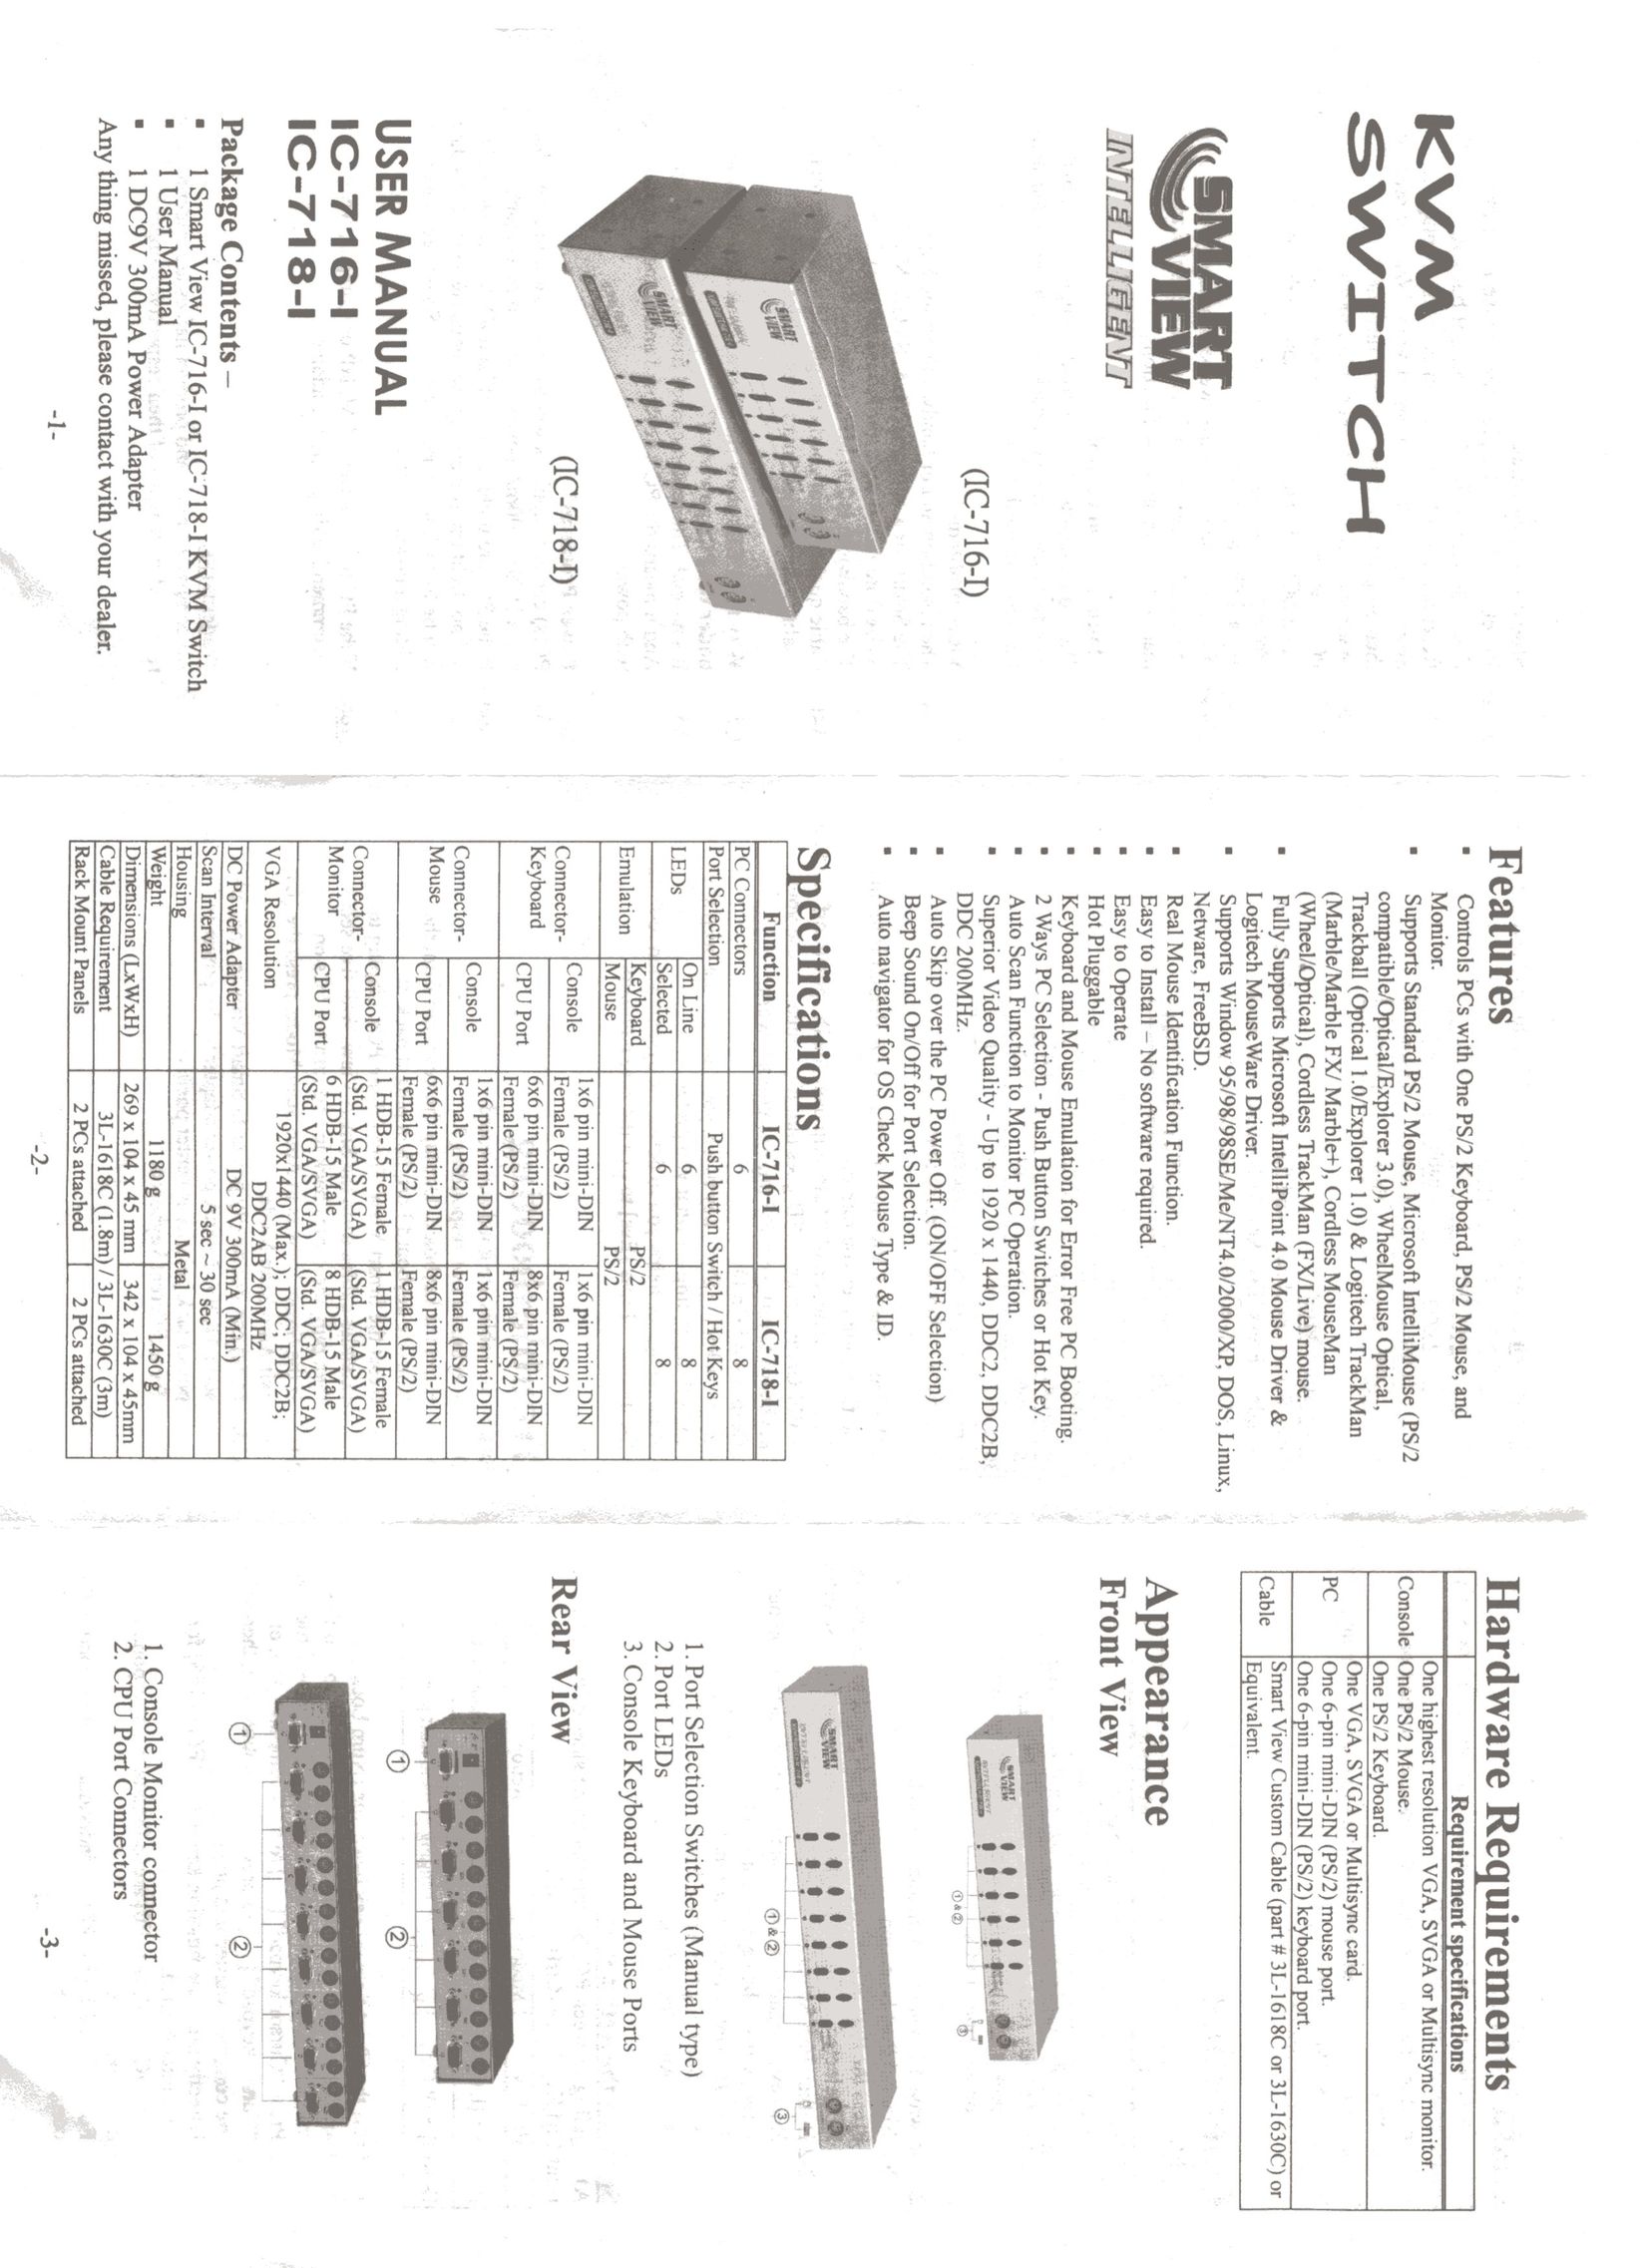 QVS IC-716-1 Switch User Manual